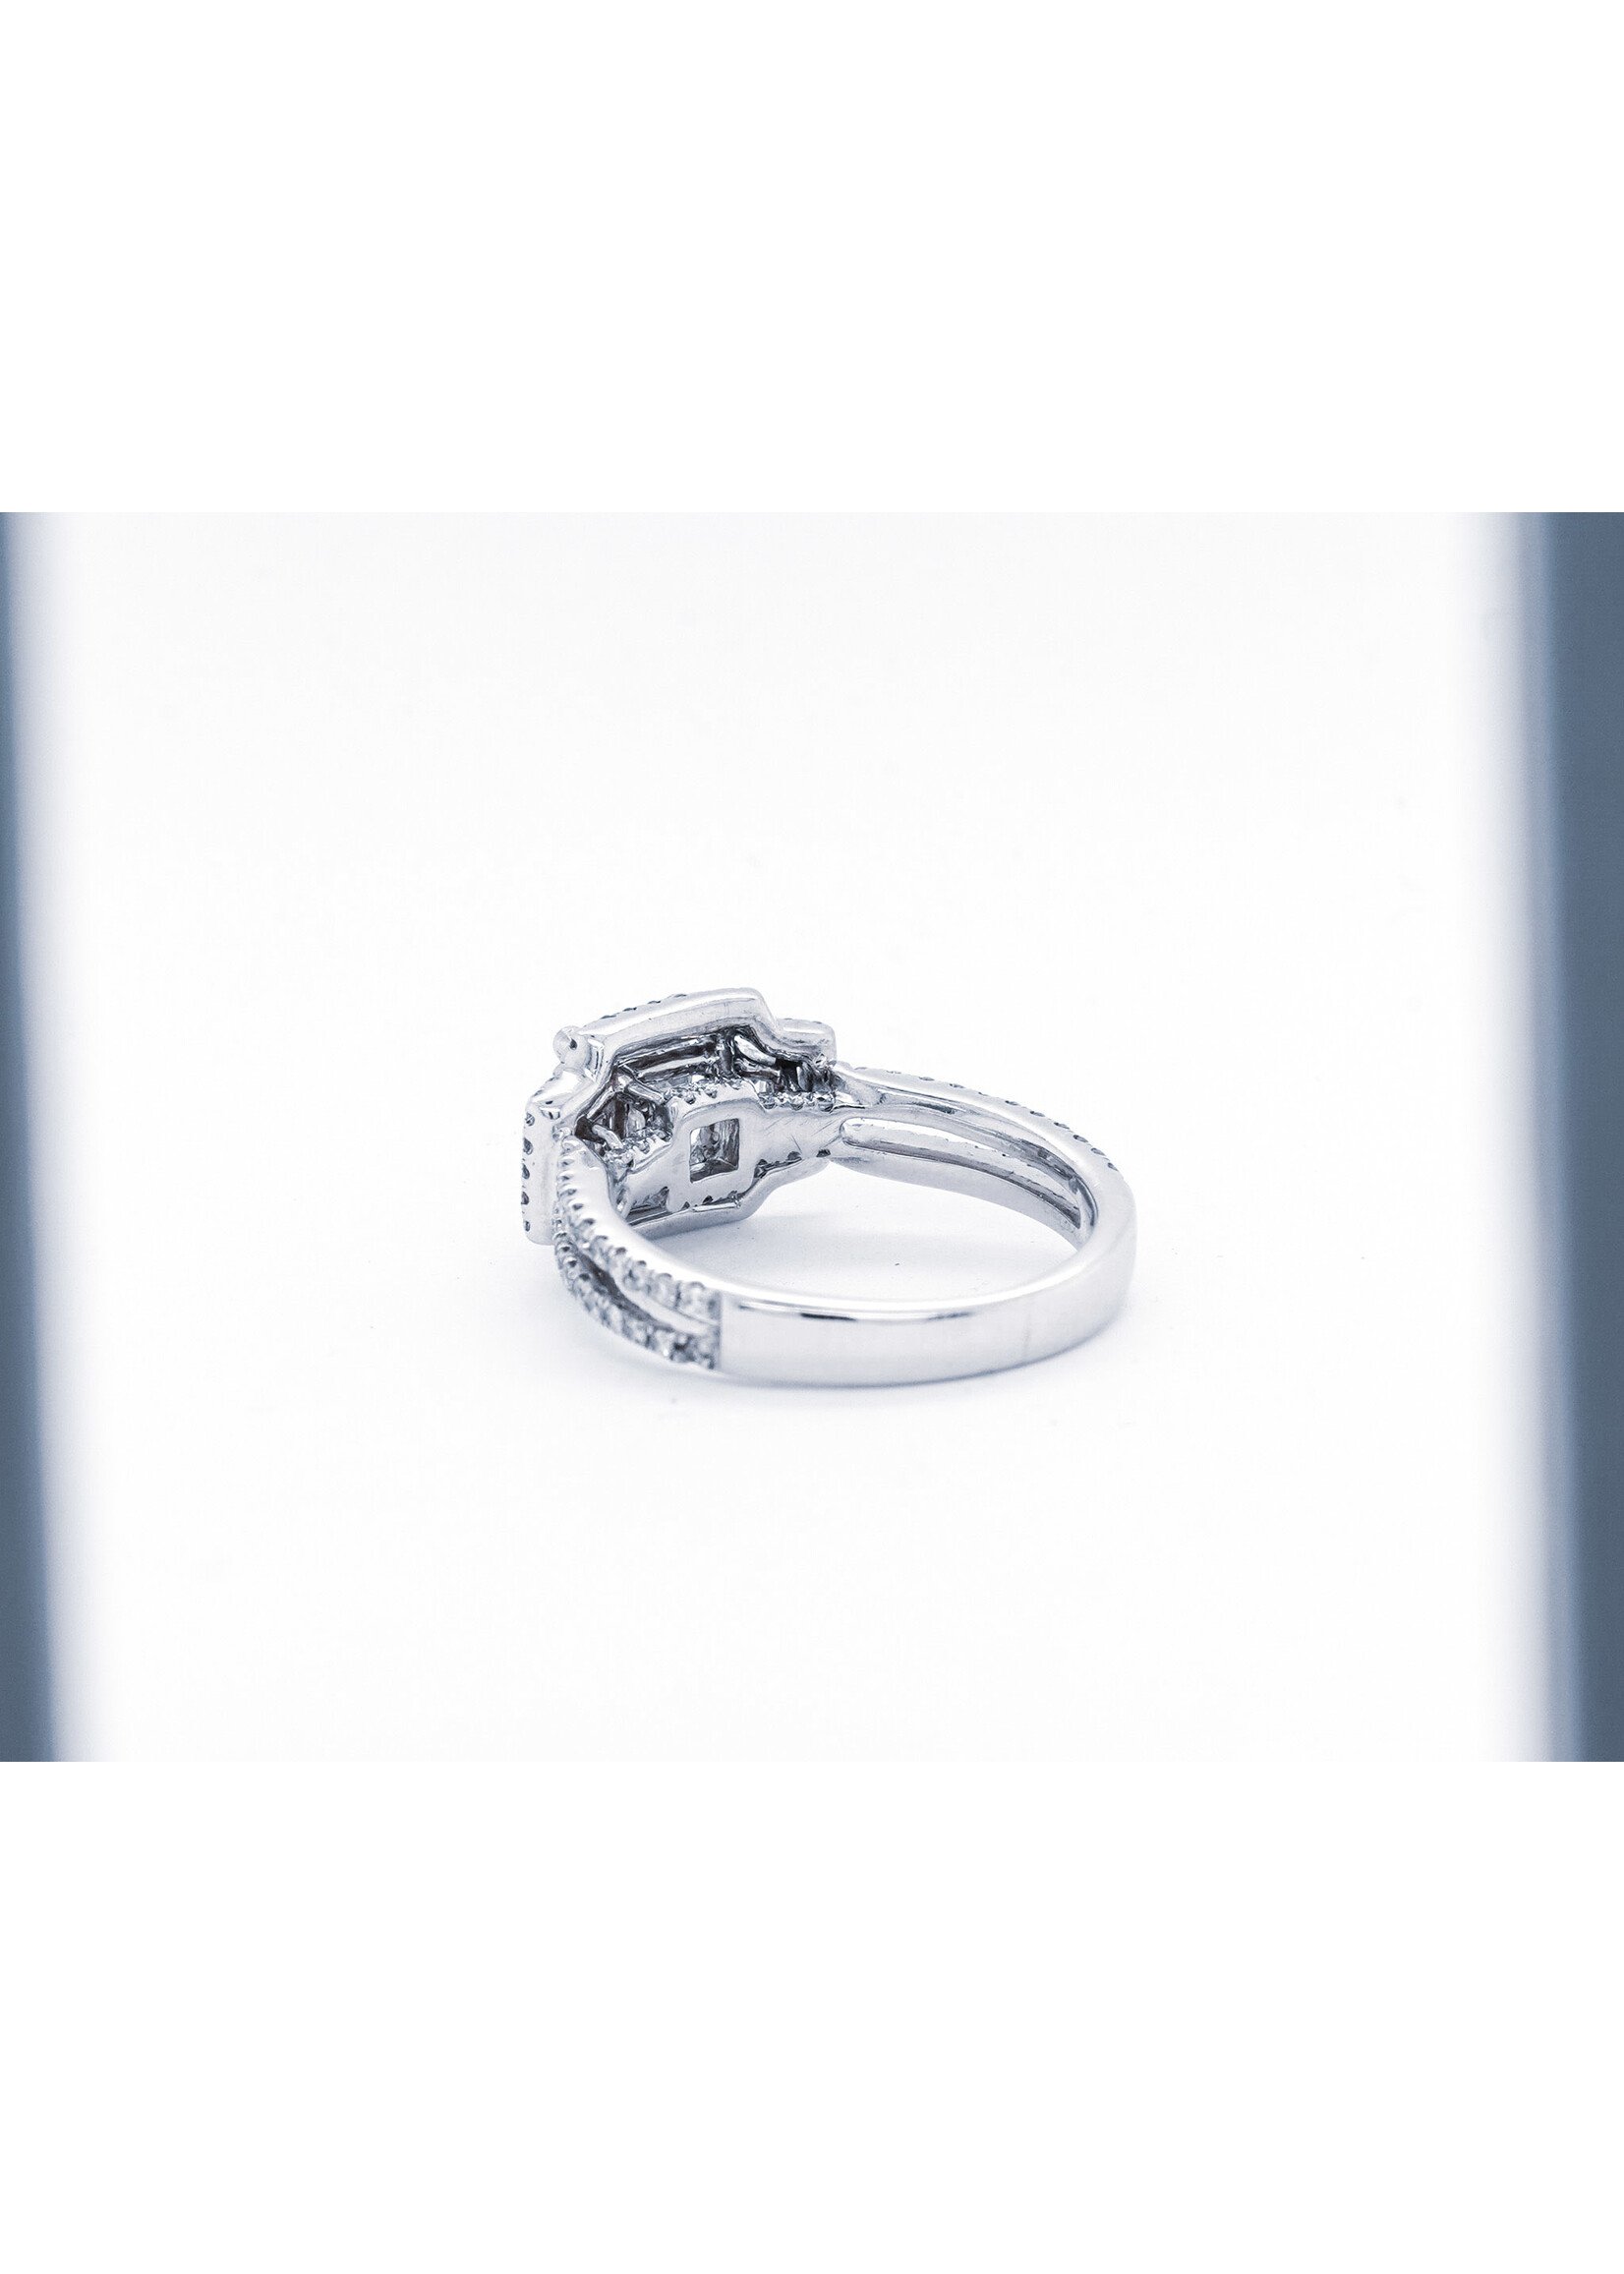 14KW 3.76g 1.81ctw (1.03ctr) I/I1 Emerald Cut Diamond Three Stone Halo Engagement Ring (size 5)